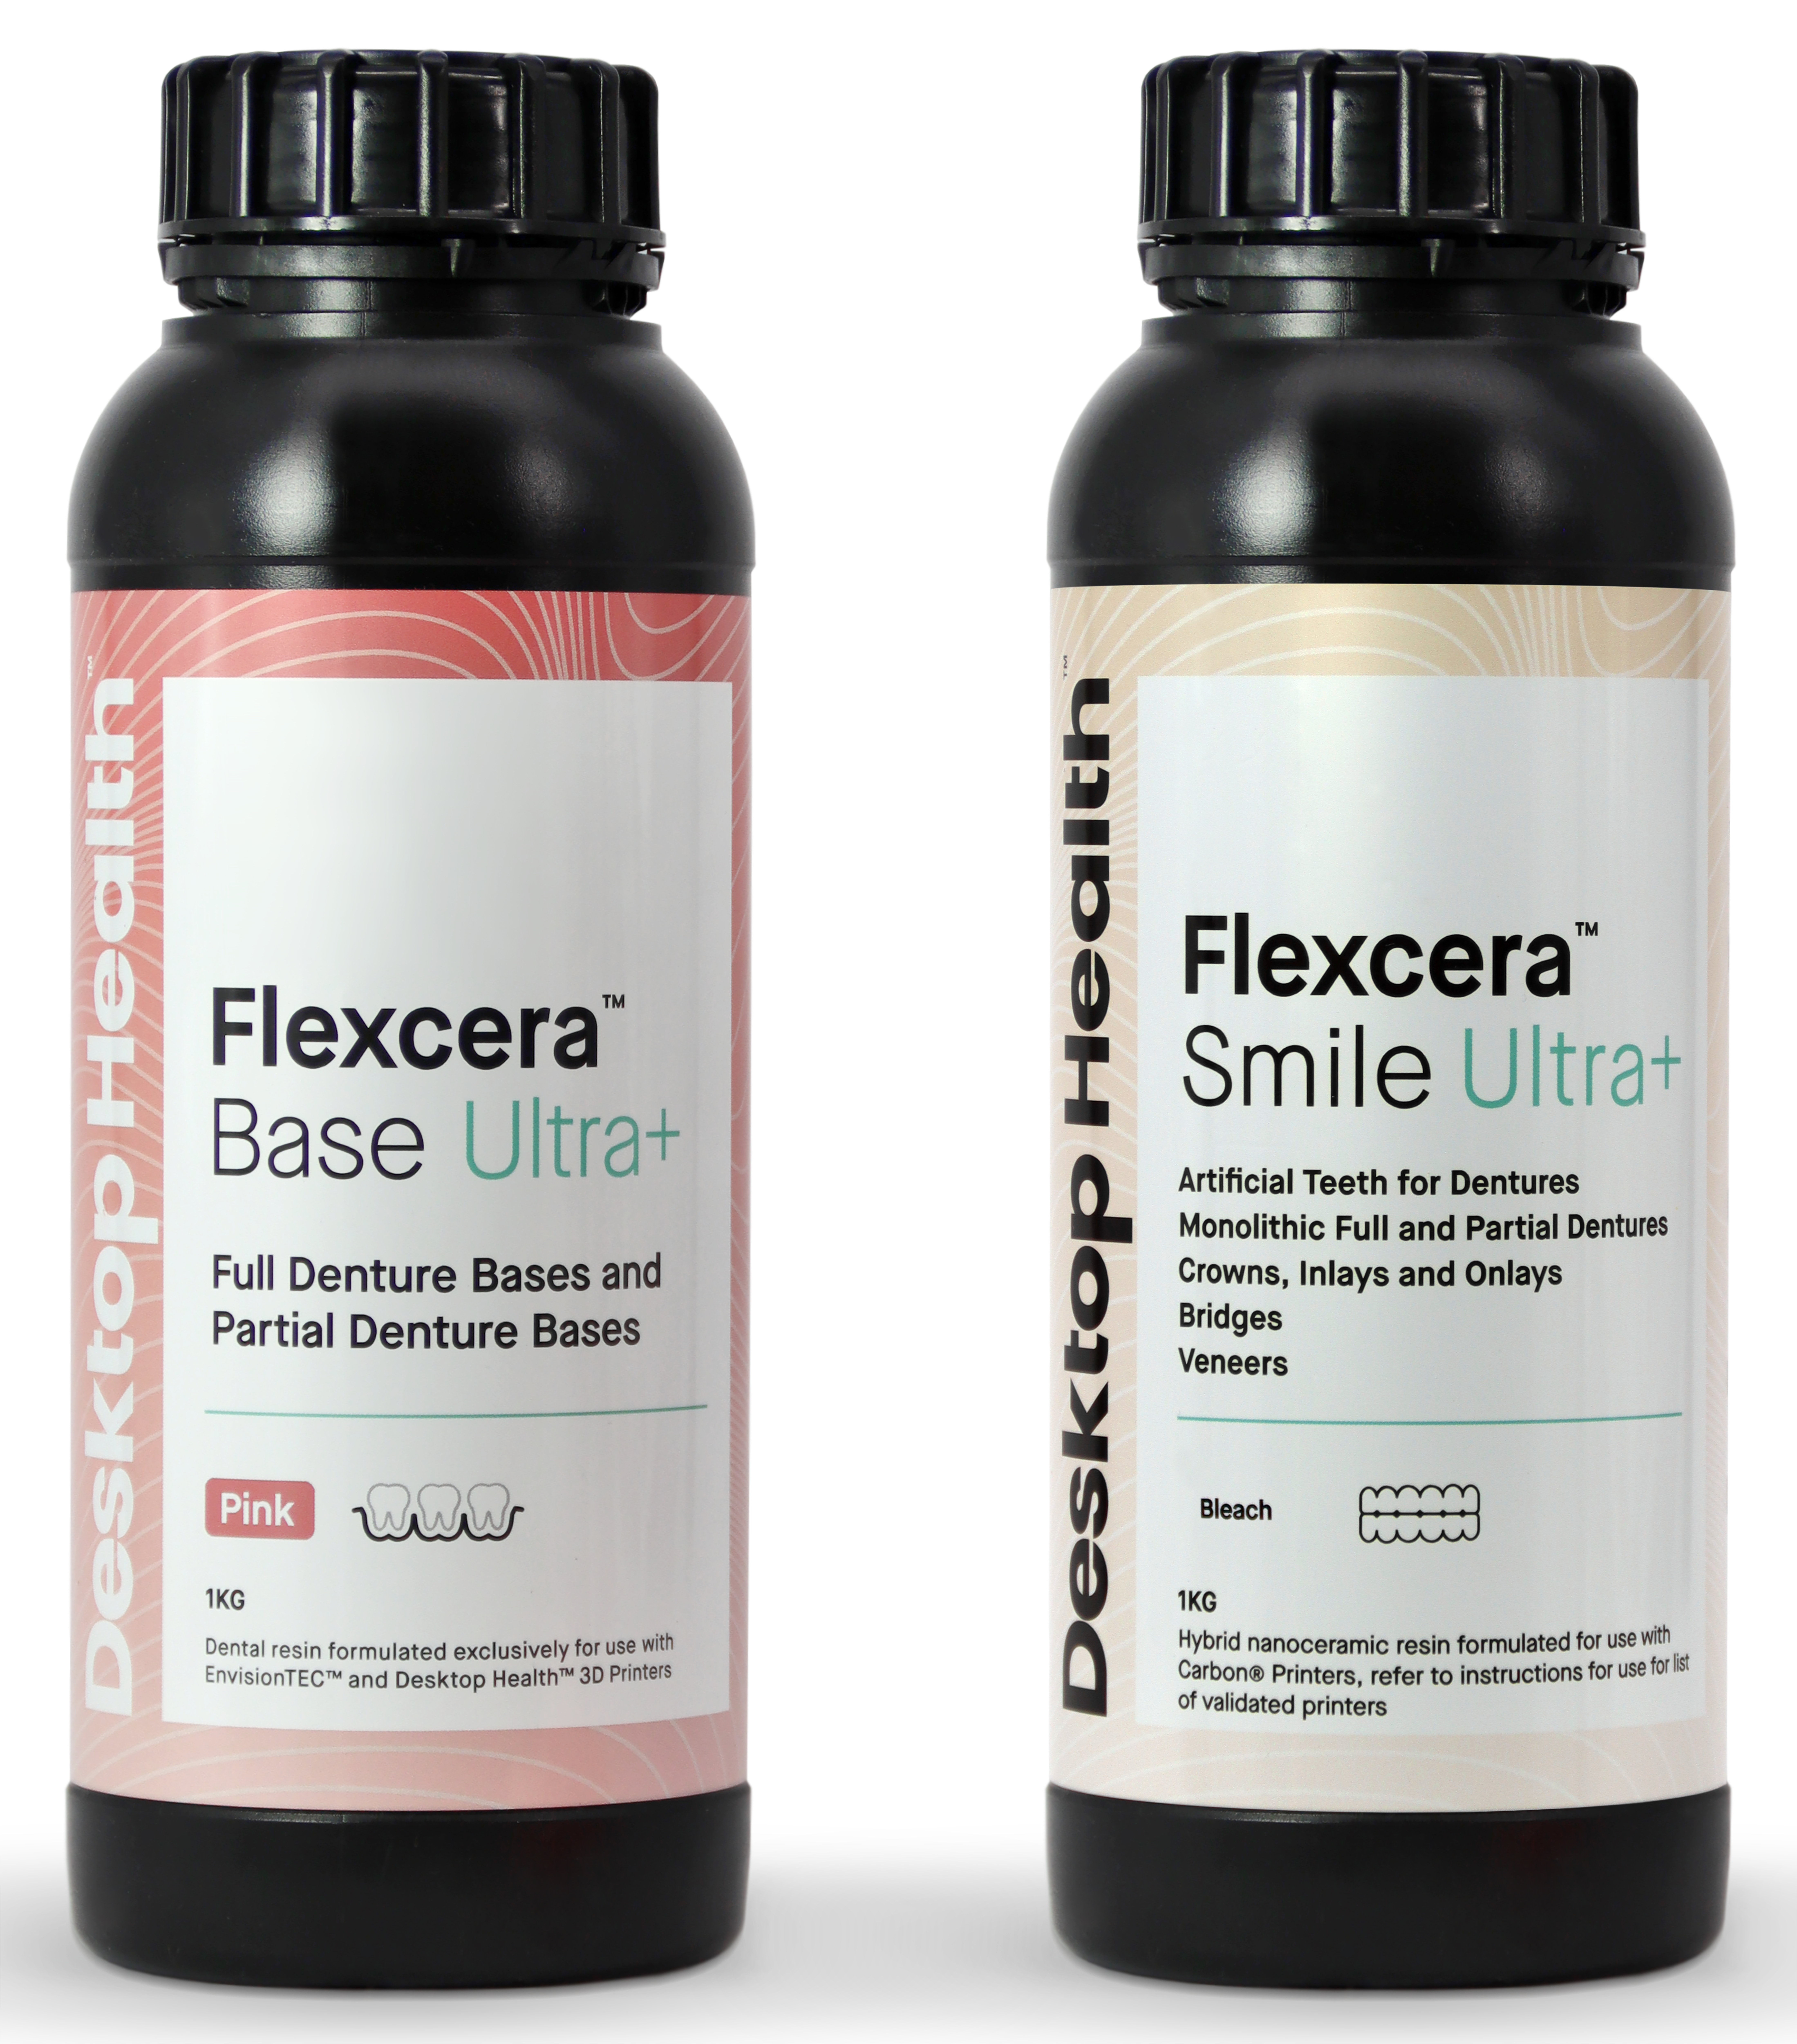 Flexcera Ultra+ perfect pair